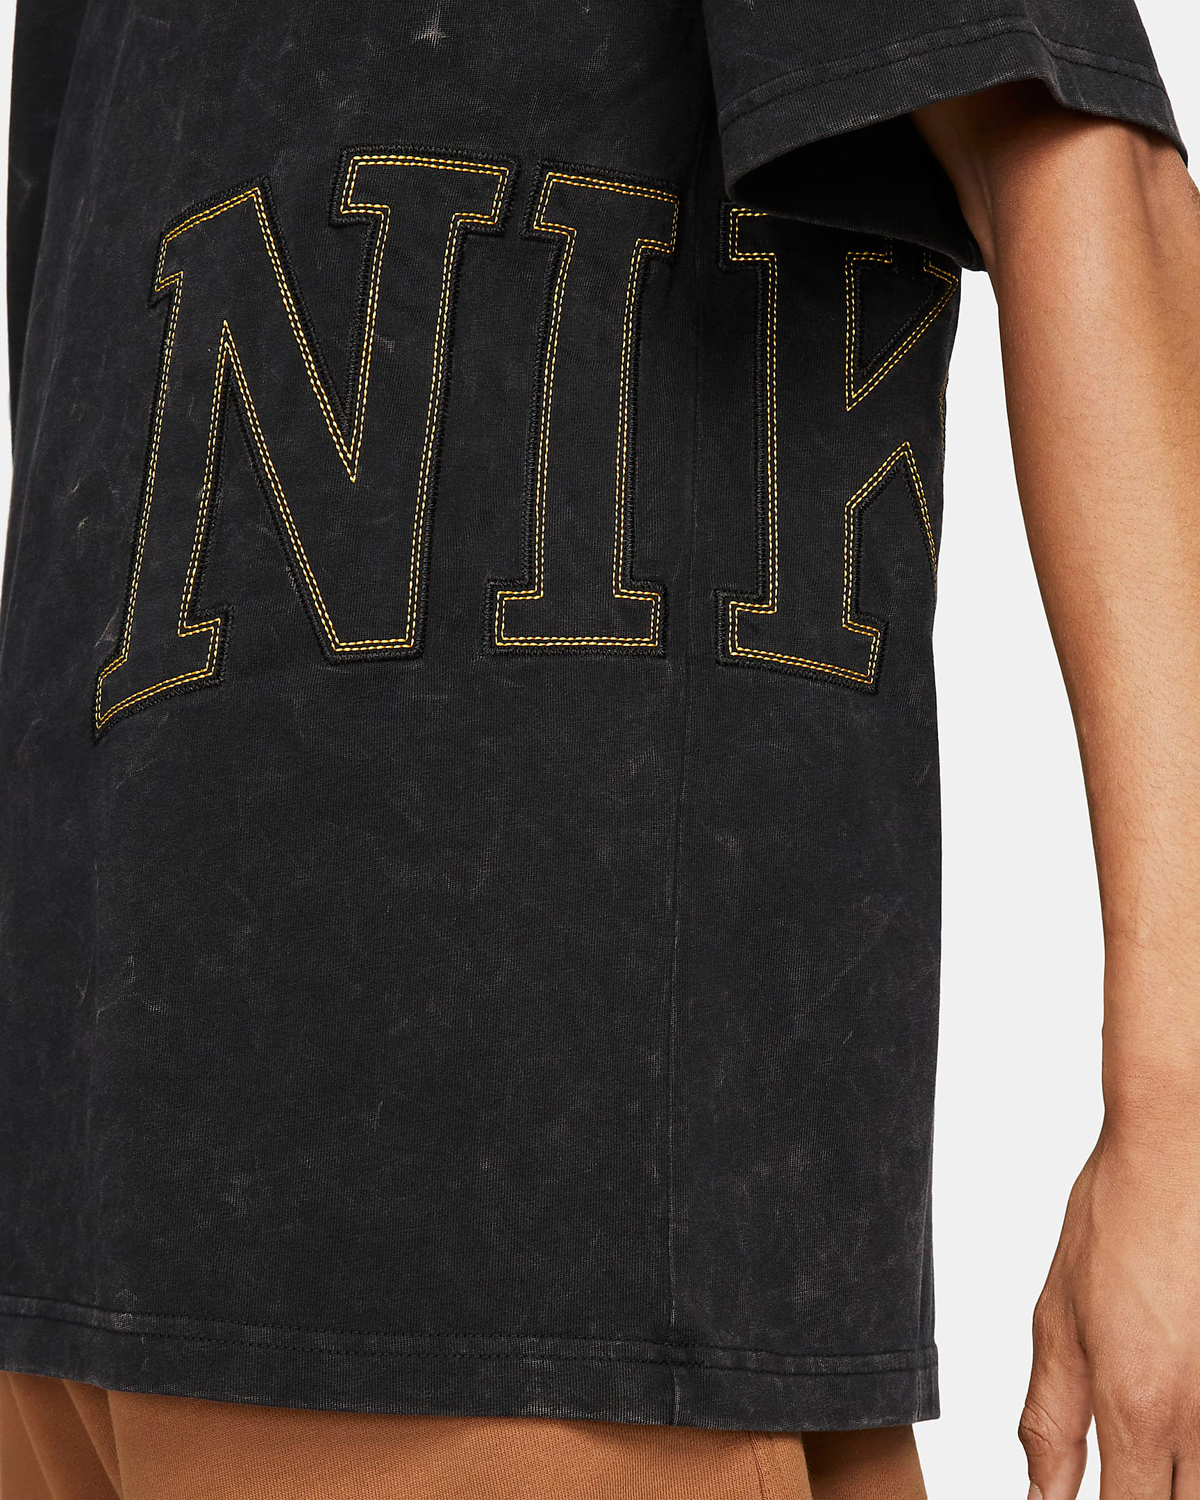 Nike-Fadeaway-T-Shirt-Black-University-Gold-3